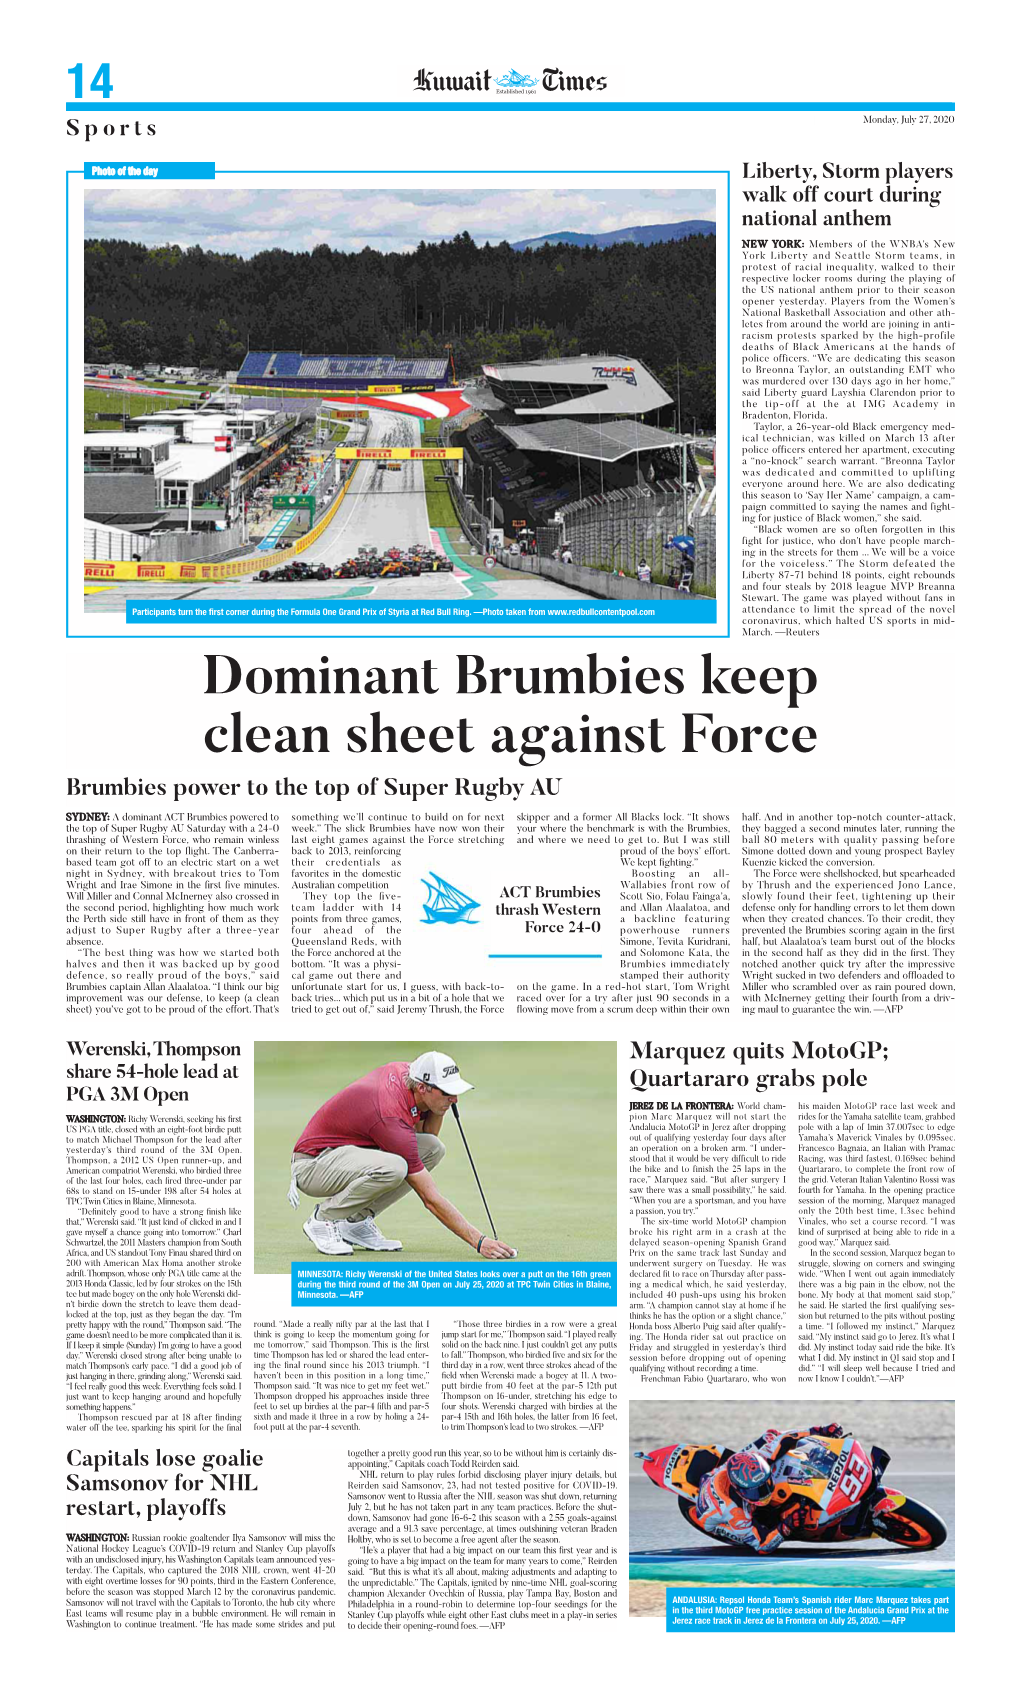 Dominant Brumbies Keep Clean Sheet Against Force Brumbies Power to the Top of Super Rugby AU